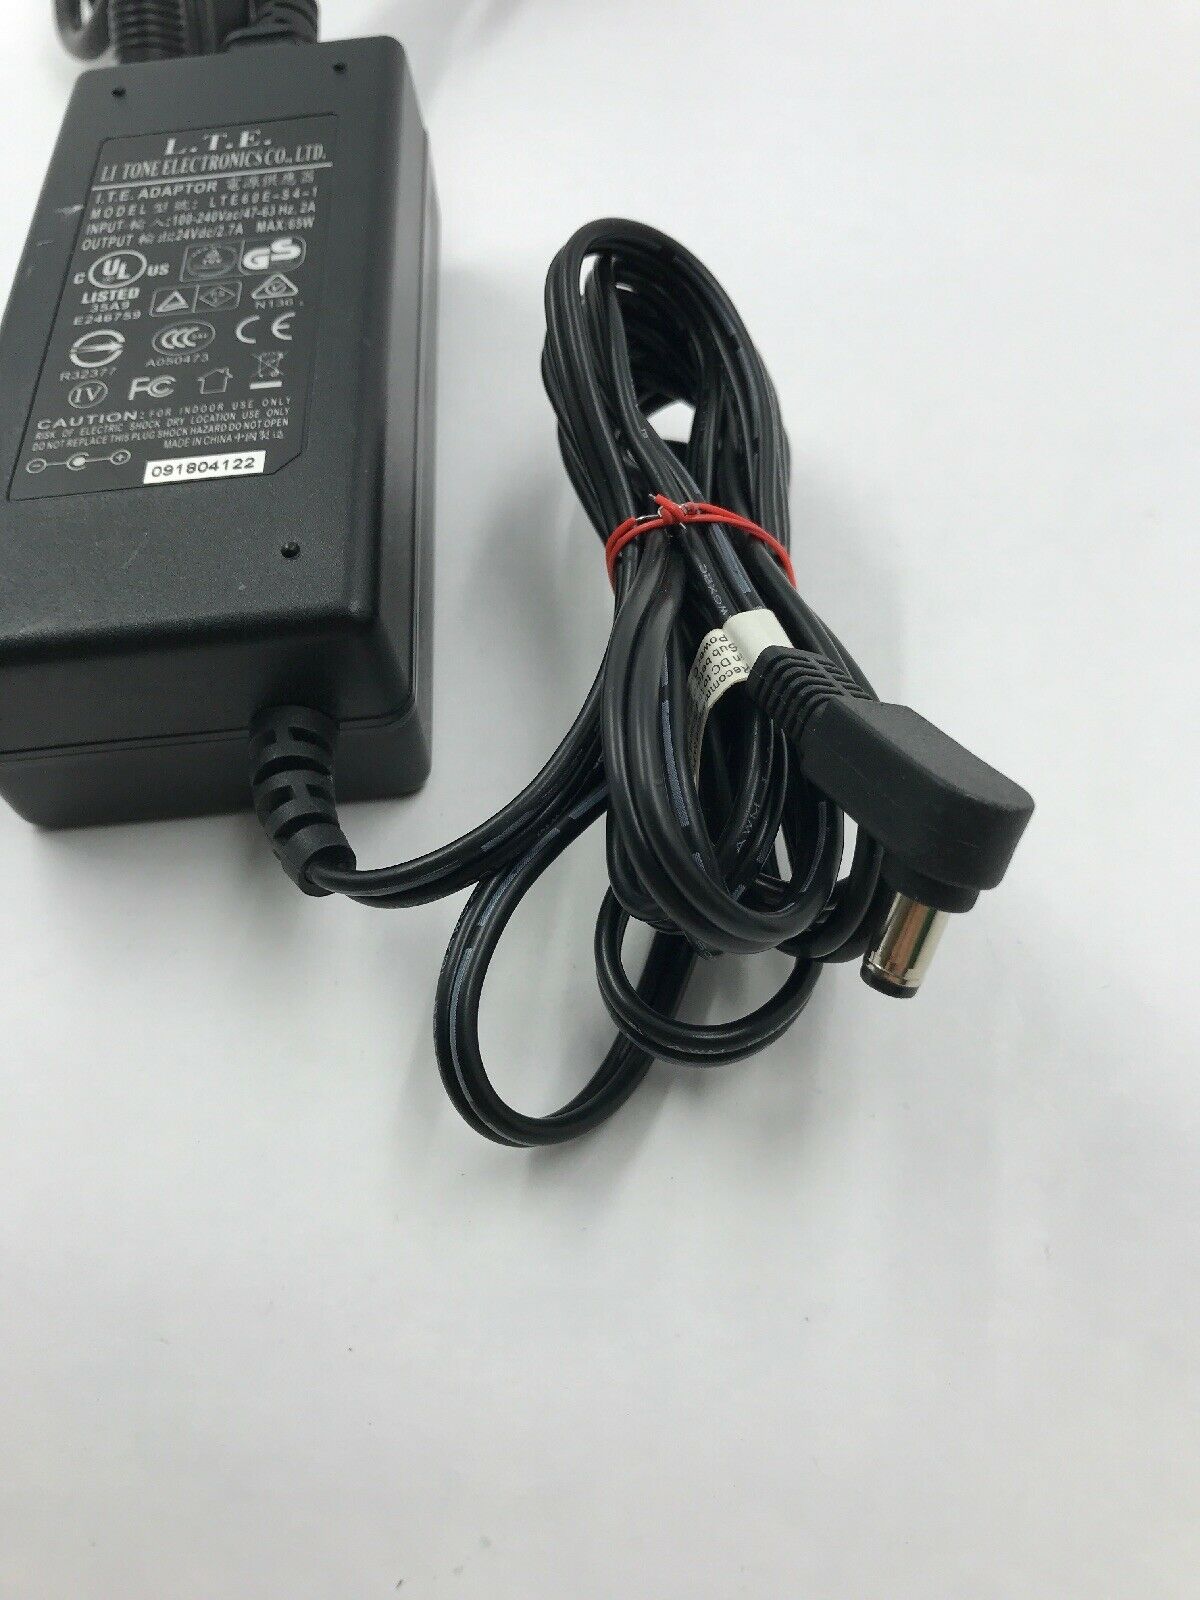 NEW LI Tone Electronics LTE60E-S4-1 24V 2.7A power supply charger I.T.E. Adaptor